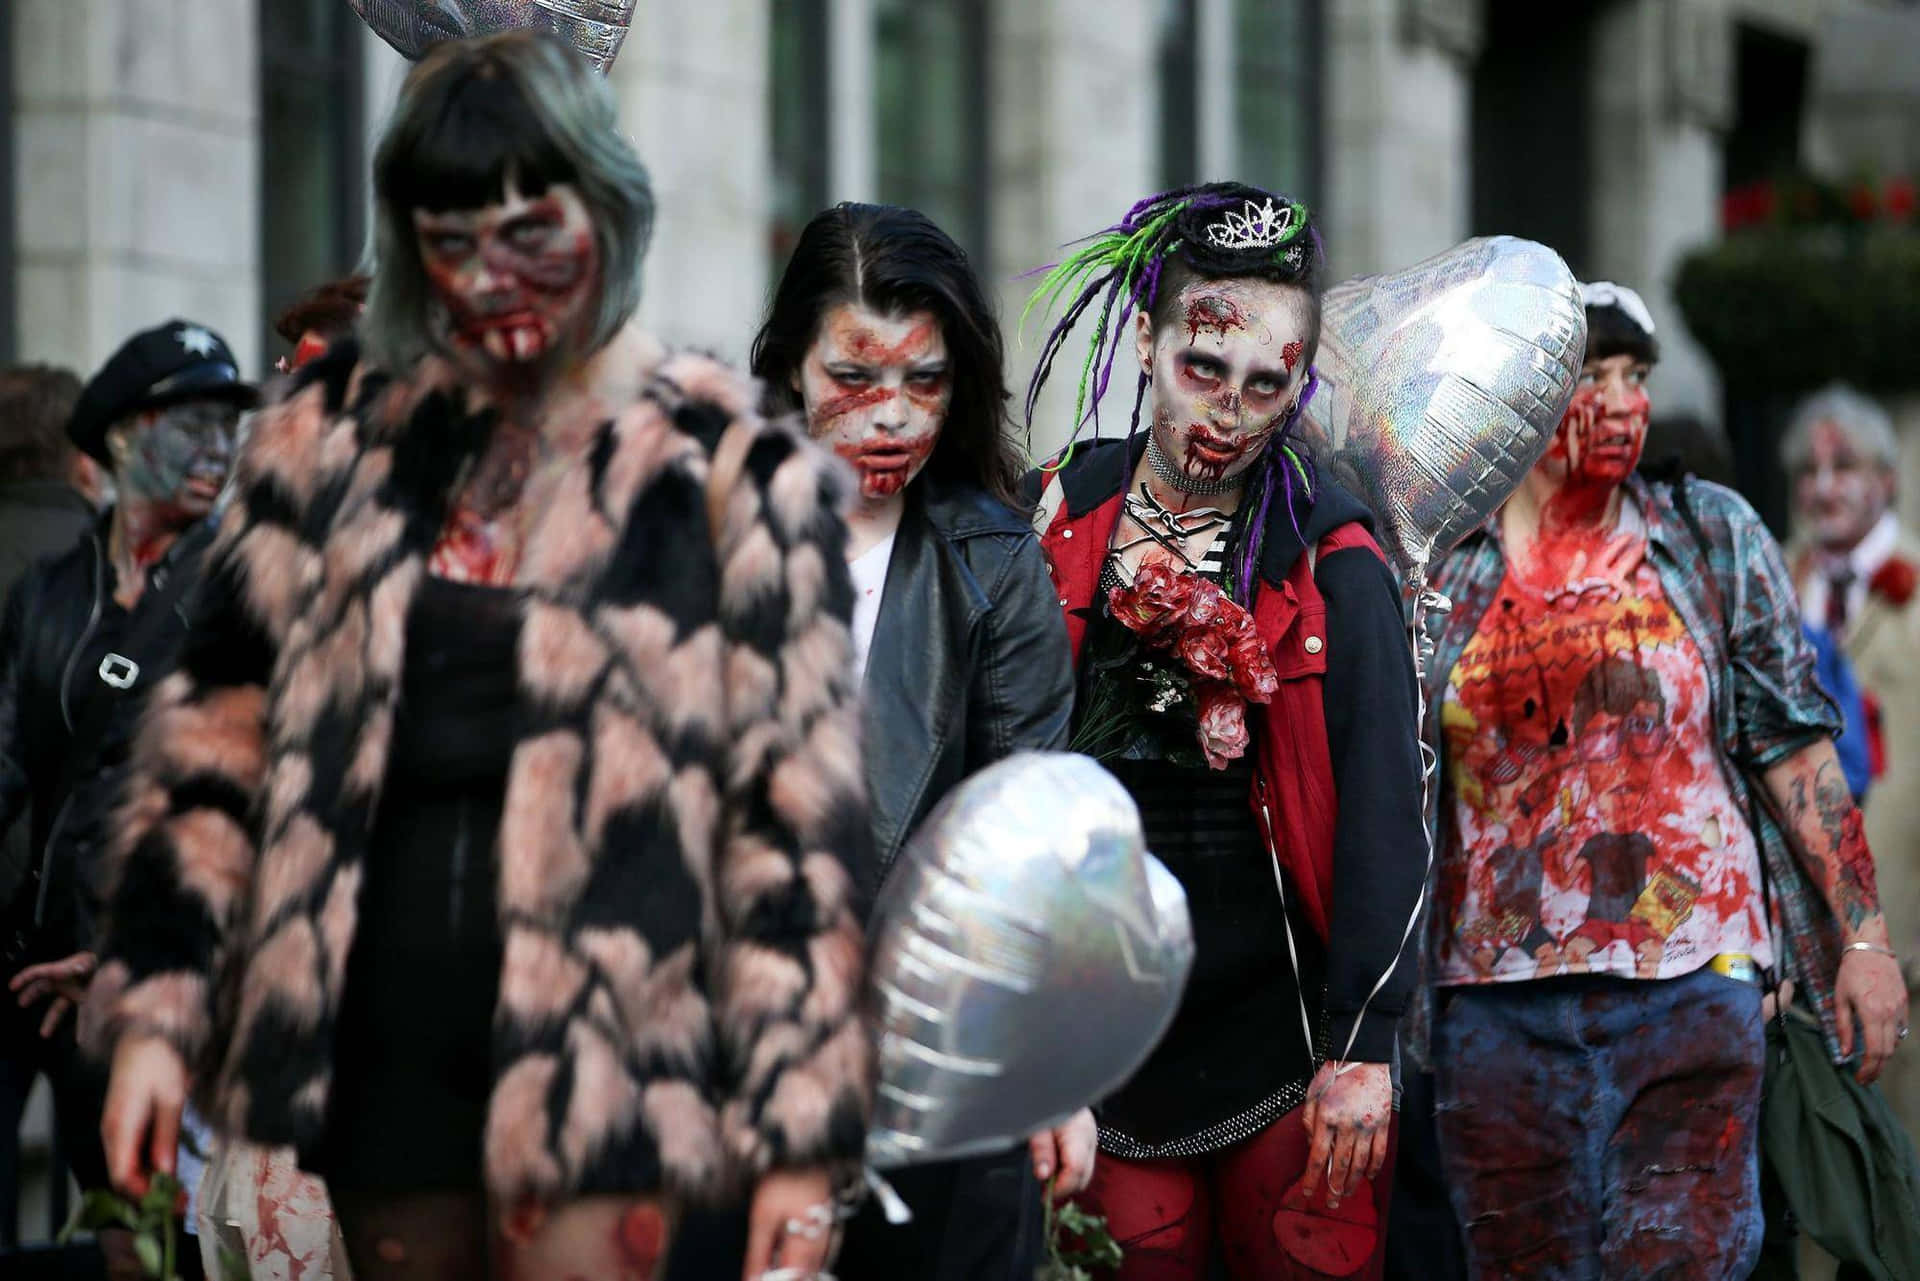 zombies walk down the street in london